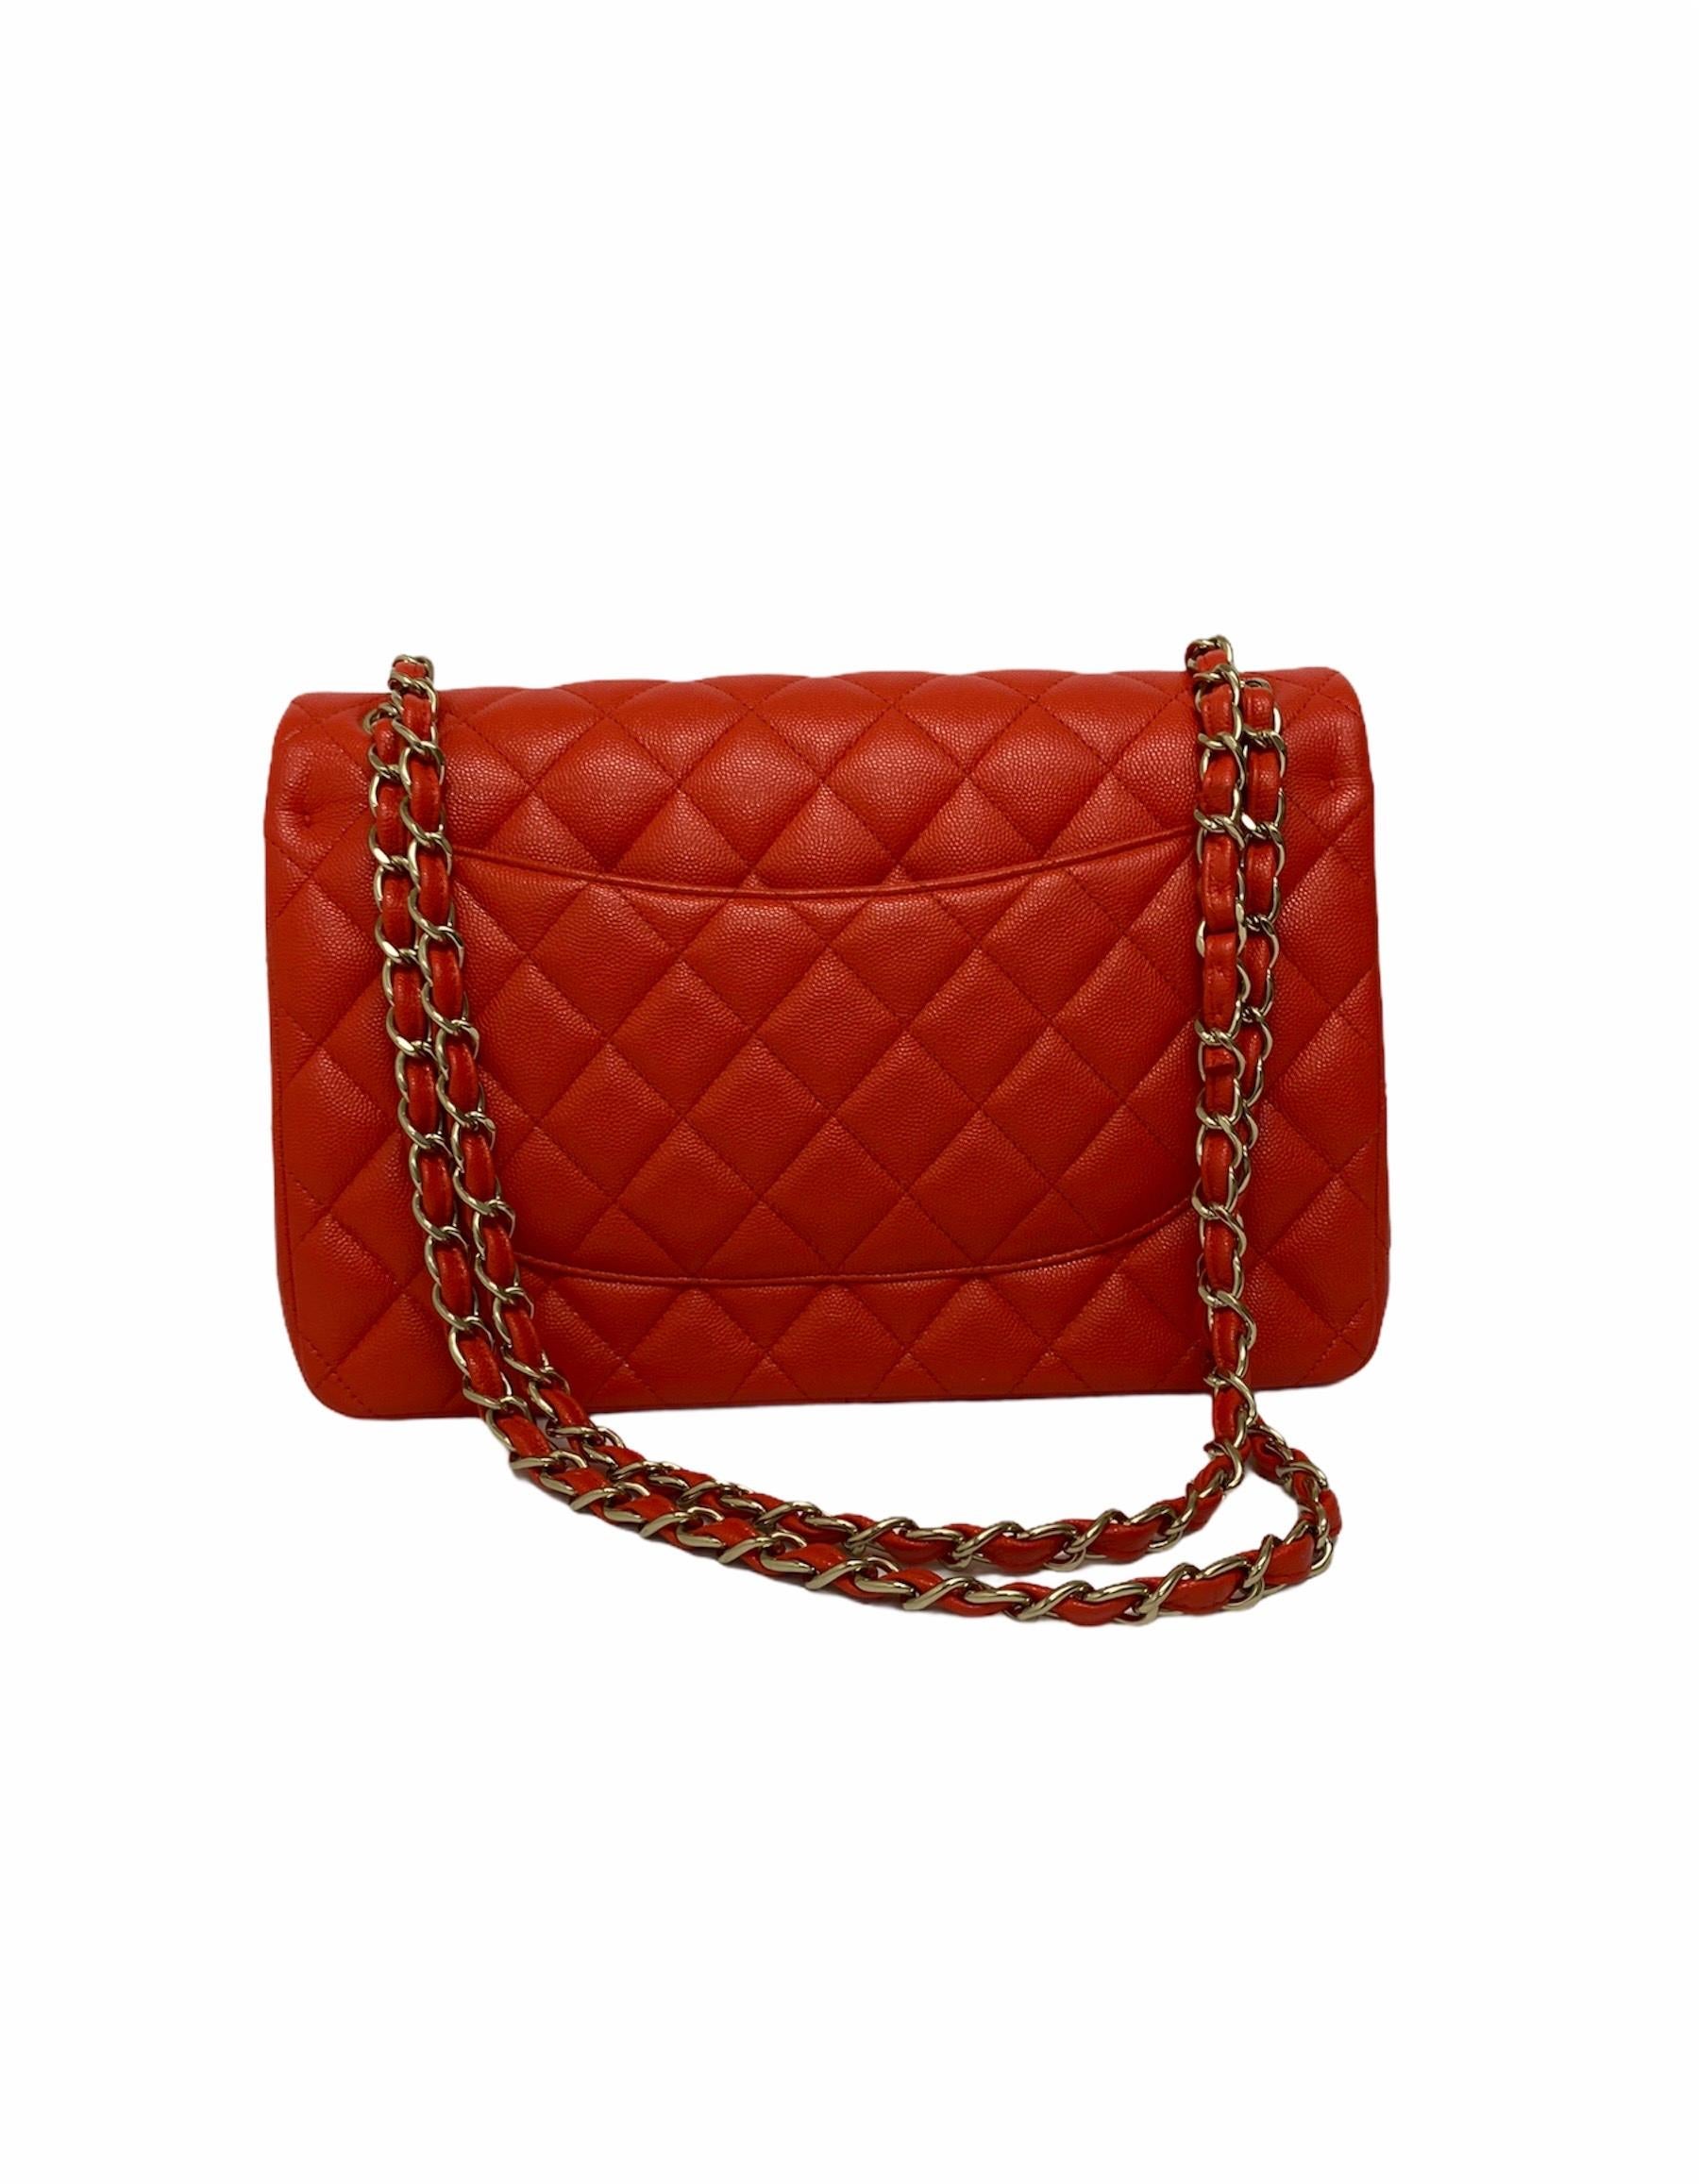 2019 Chanel Red Leather Maxi Jumbo Bag 1